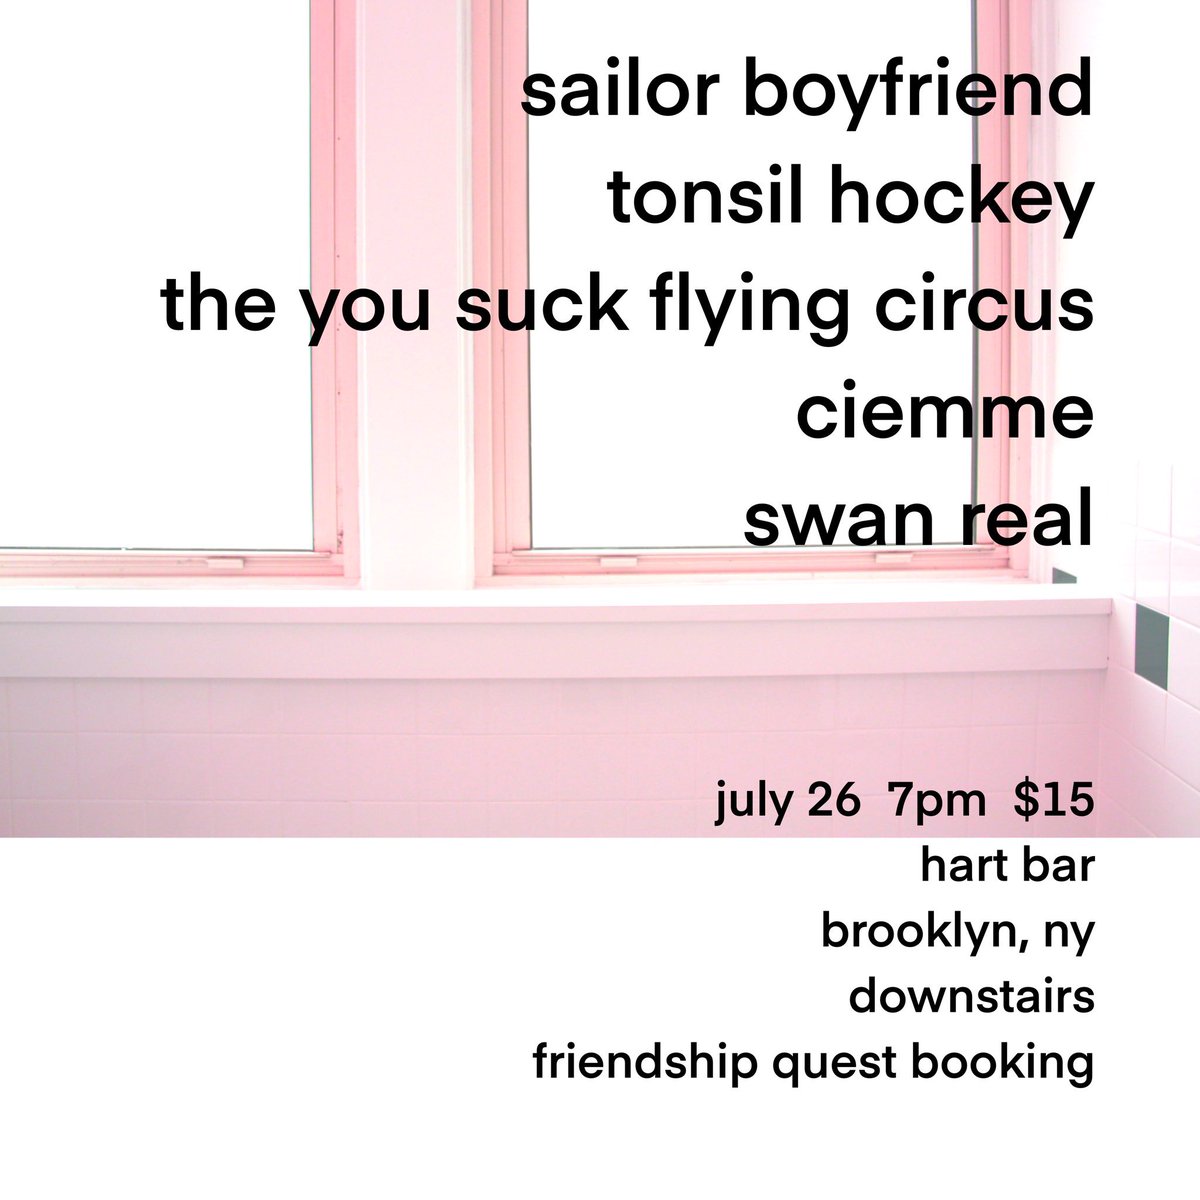 TONIGHT IN BROOKLYN!! @tonsilhockeybk is playing at Hart Bar with @whatscharlotte + @RealSwanSong + @theyousucks + @SailorBoyfriend!!!

Show’s at 7 pm! See ya at the giiiiig 💜

📸: @isthatyourmain